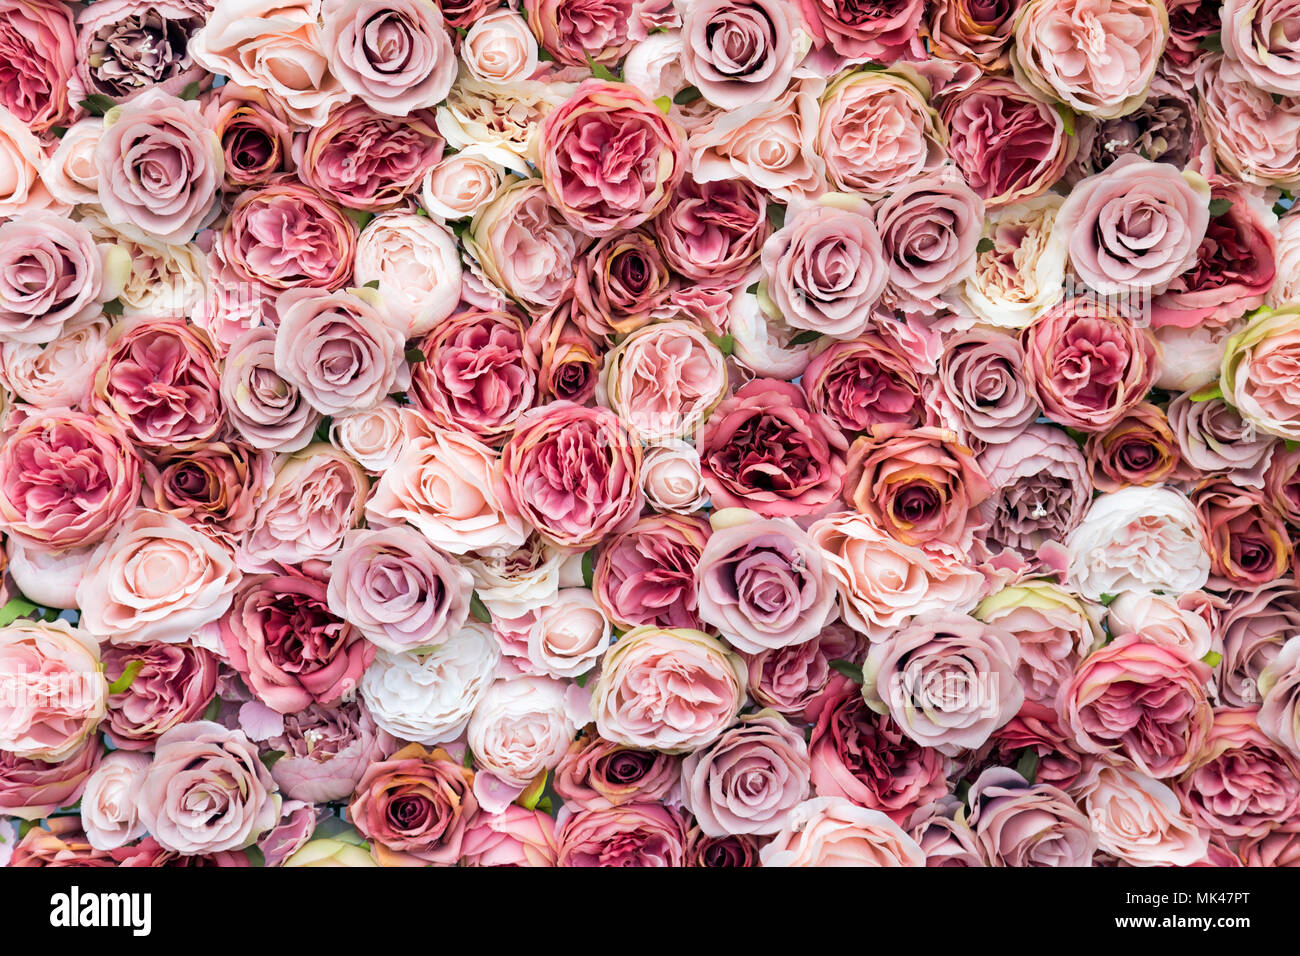 Muro de rosas en diferentes tonalidades de color rosa de fondo Foto de stock